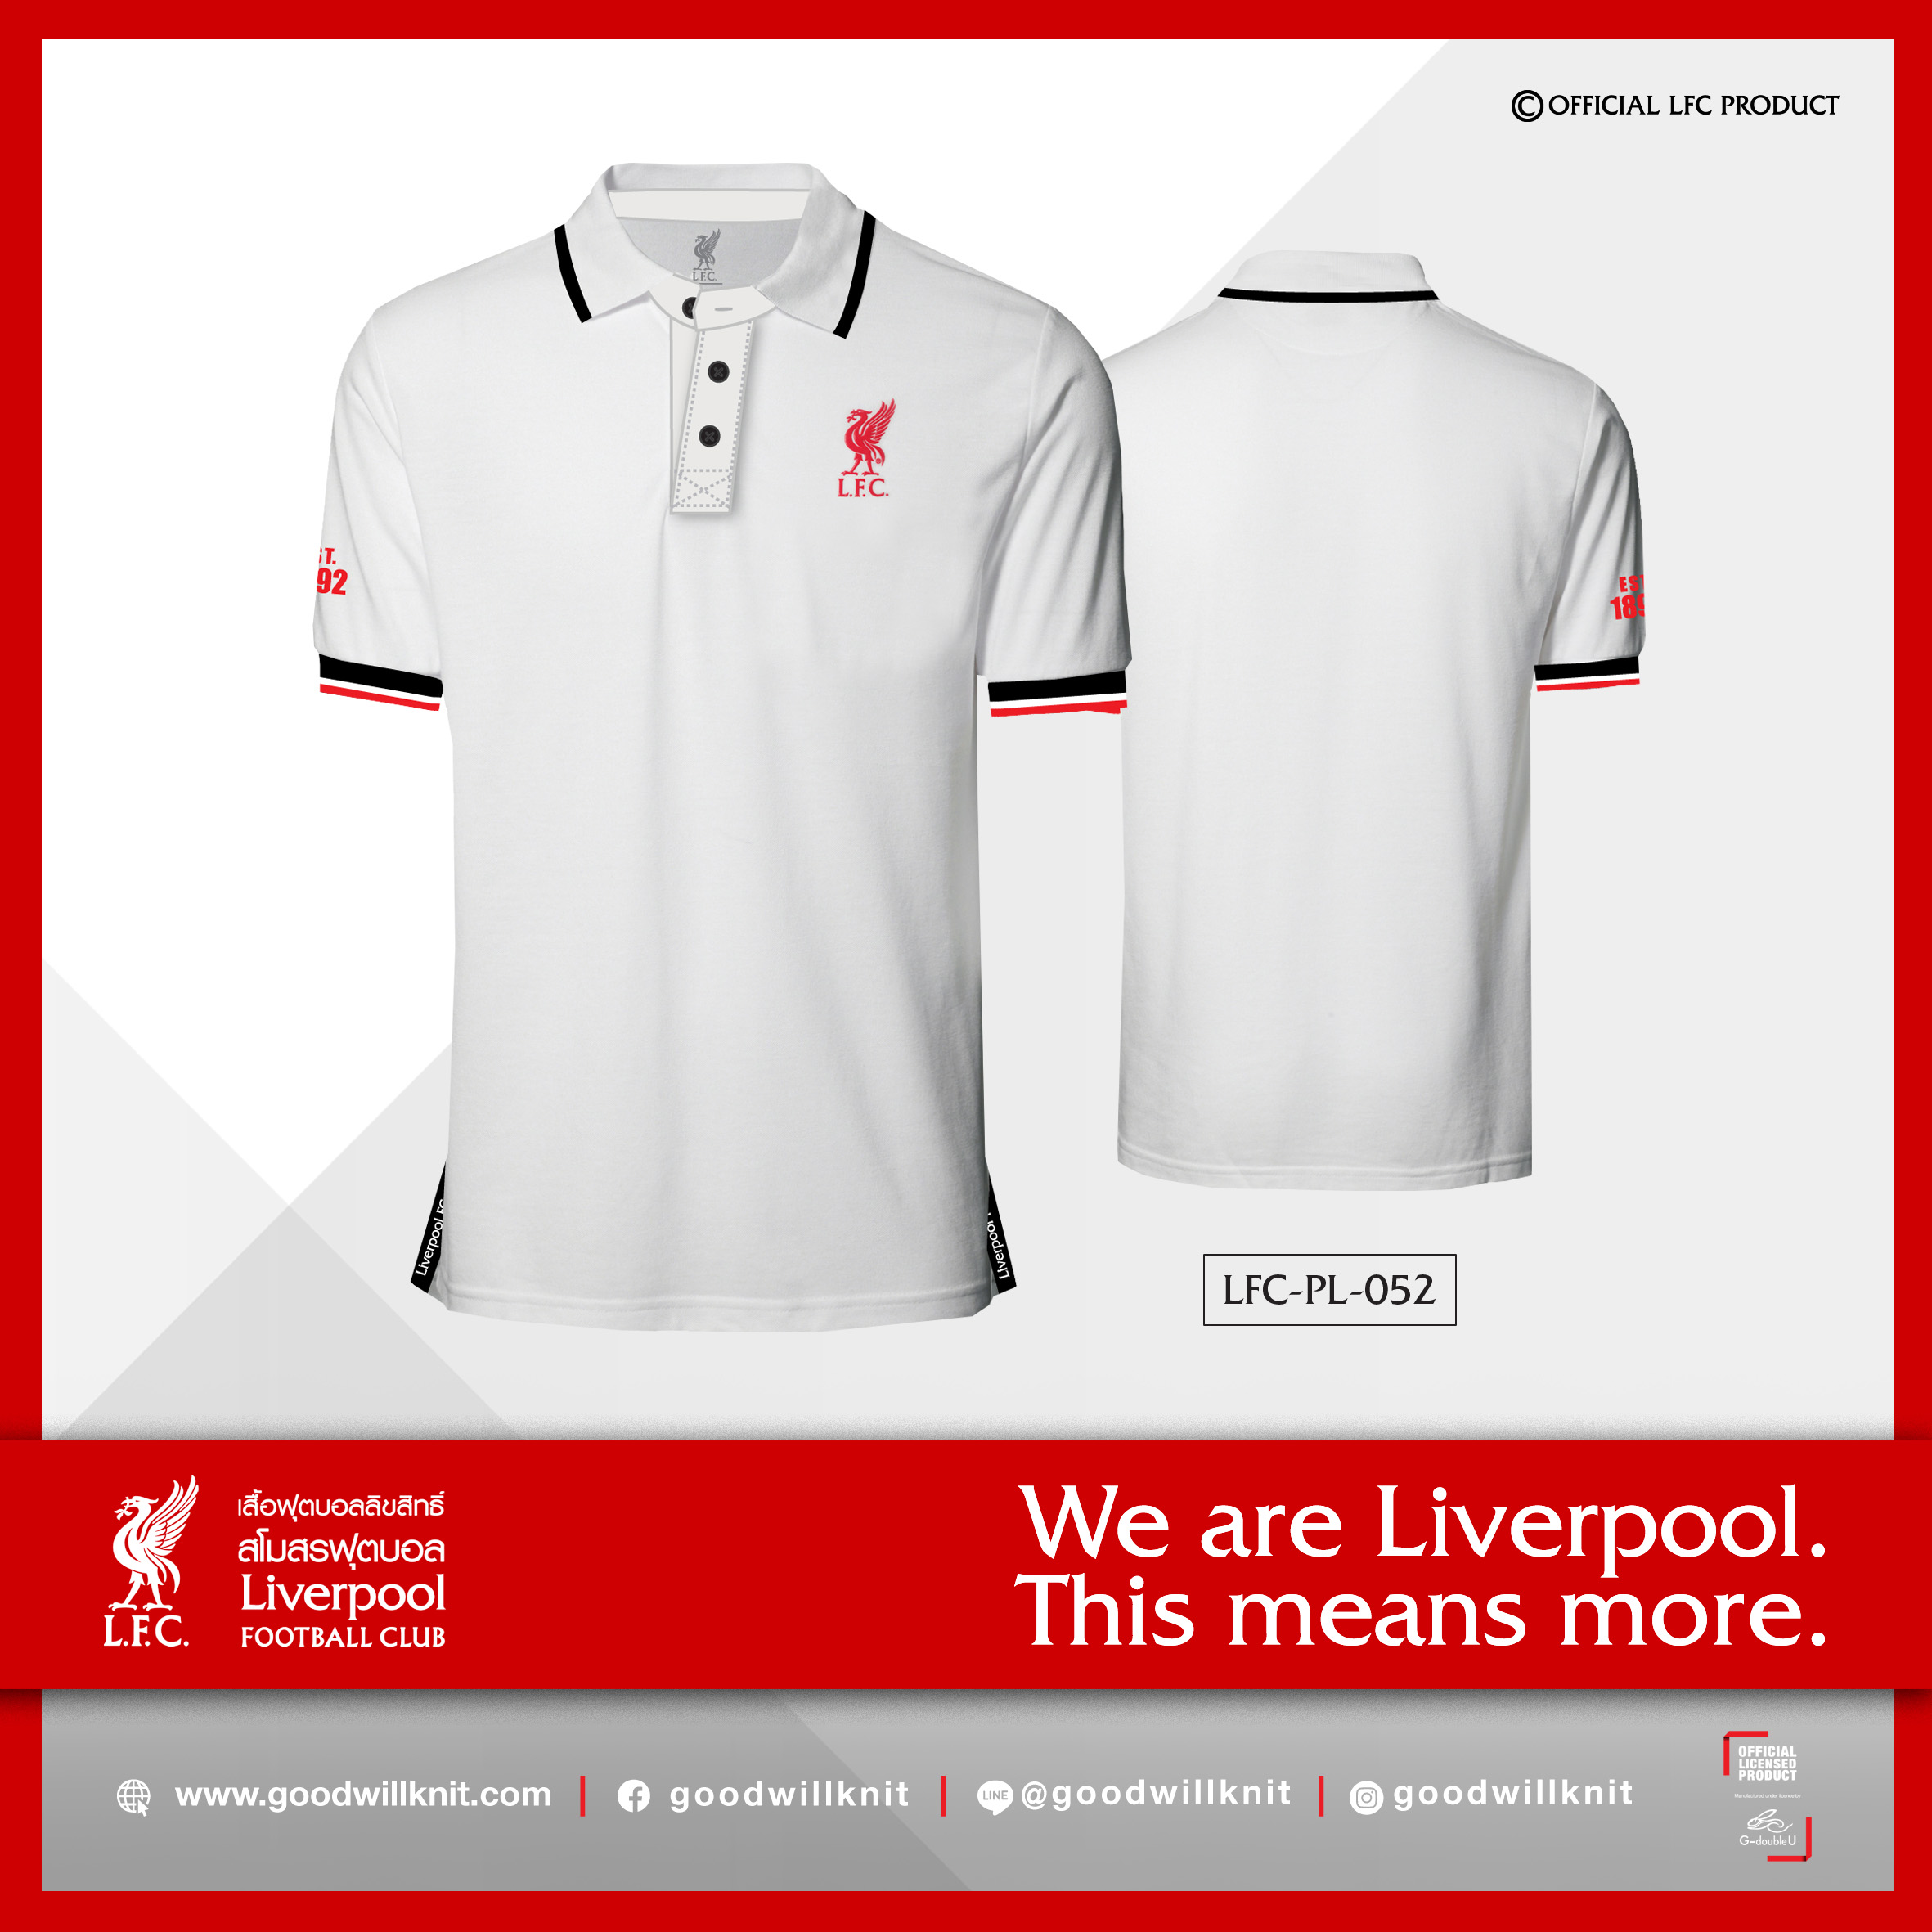 Goodwillknit Liverpool เสื้อลิเวอร์พูล เสื้อโปโล ลิเวอร์พูล ลิขสิทธิ์ C052 มี 3 สี